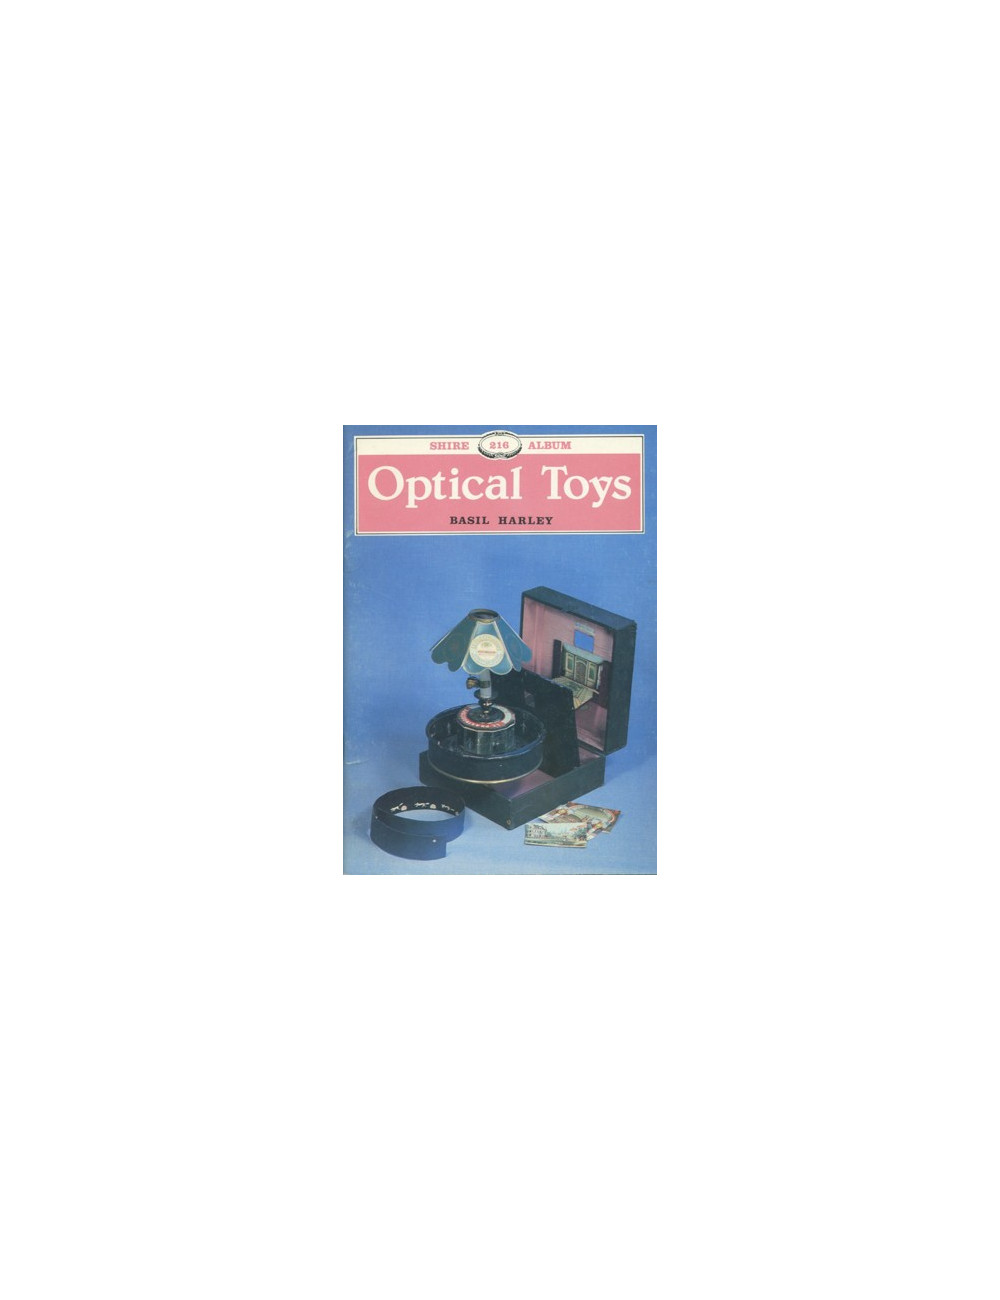 OPTICAL TOYS (Basil HARLEY)